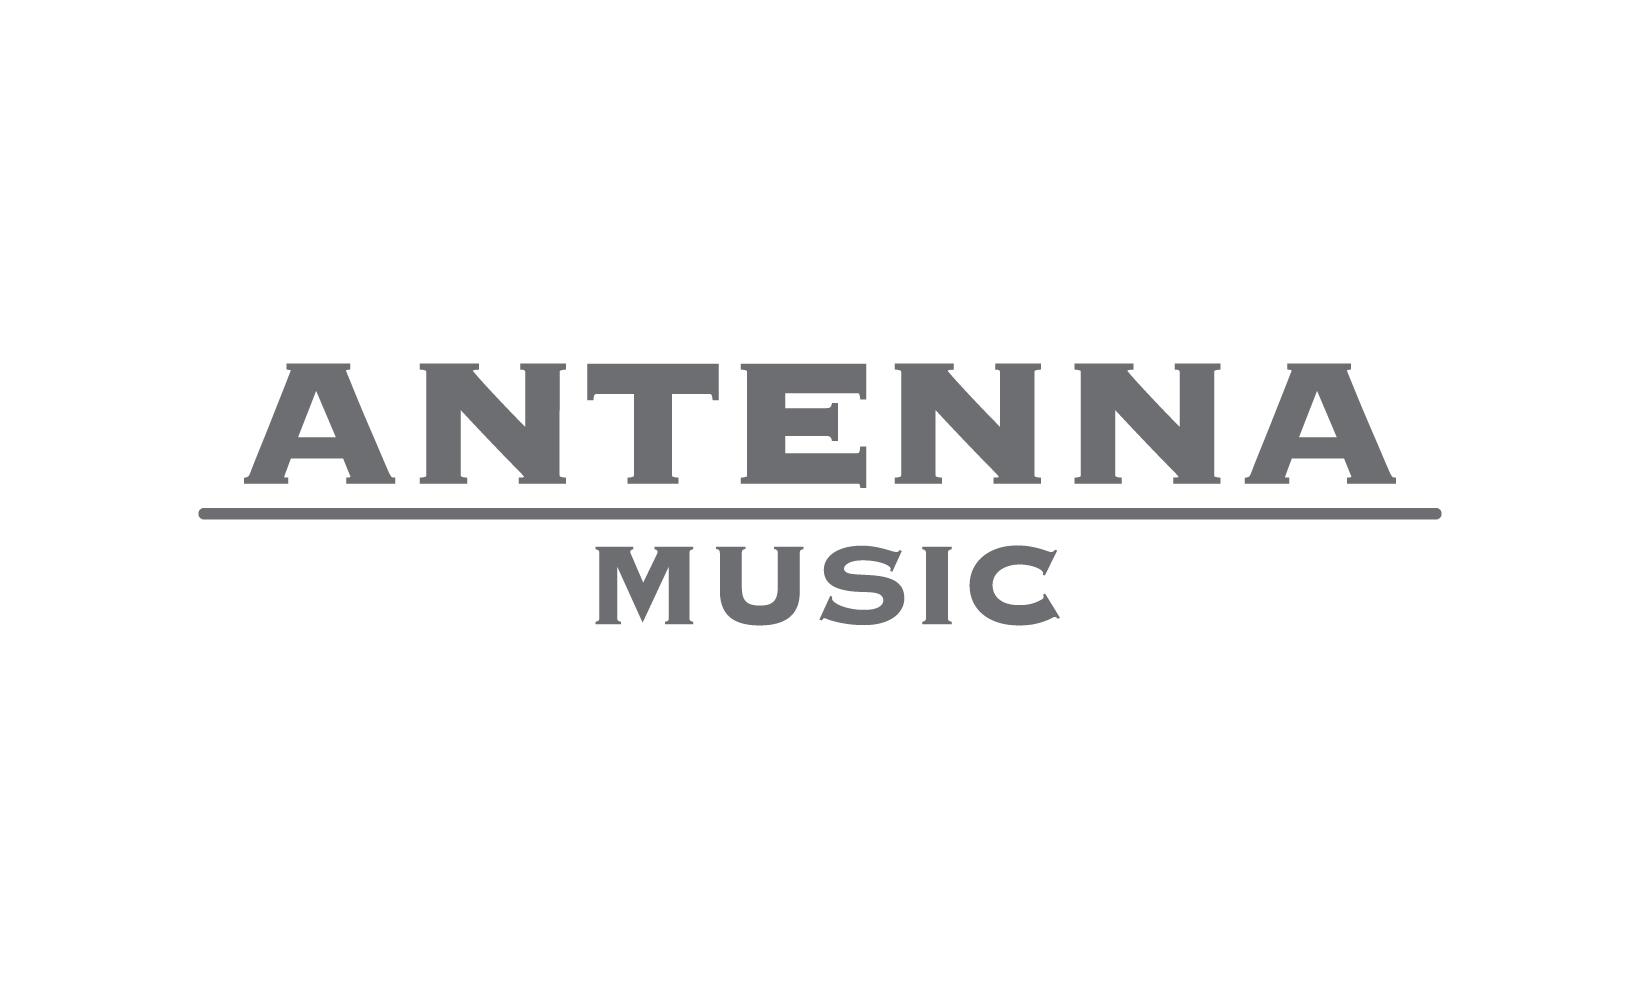 Product ANTENNA MUSIC - Antenna Group image